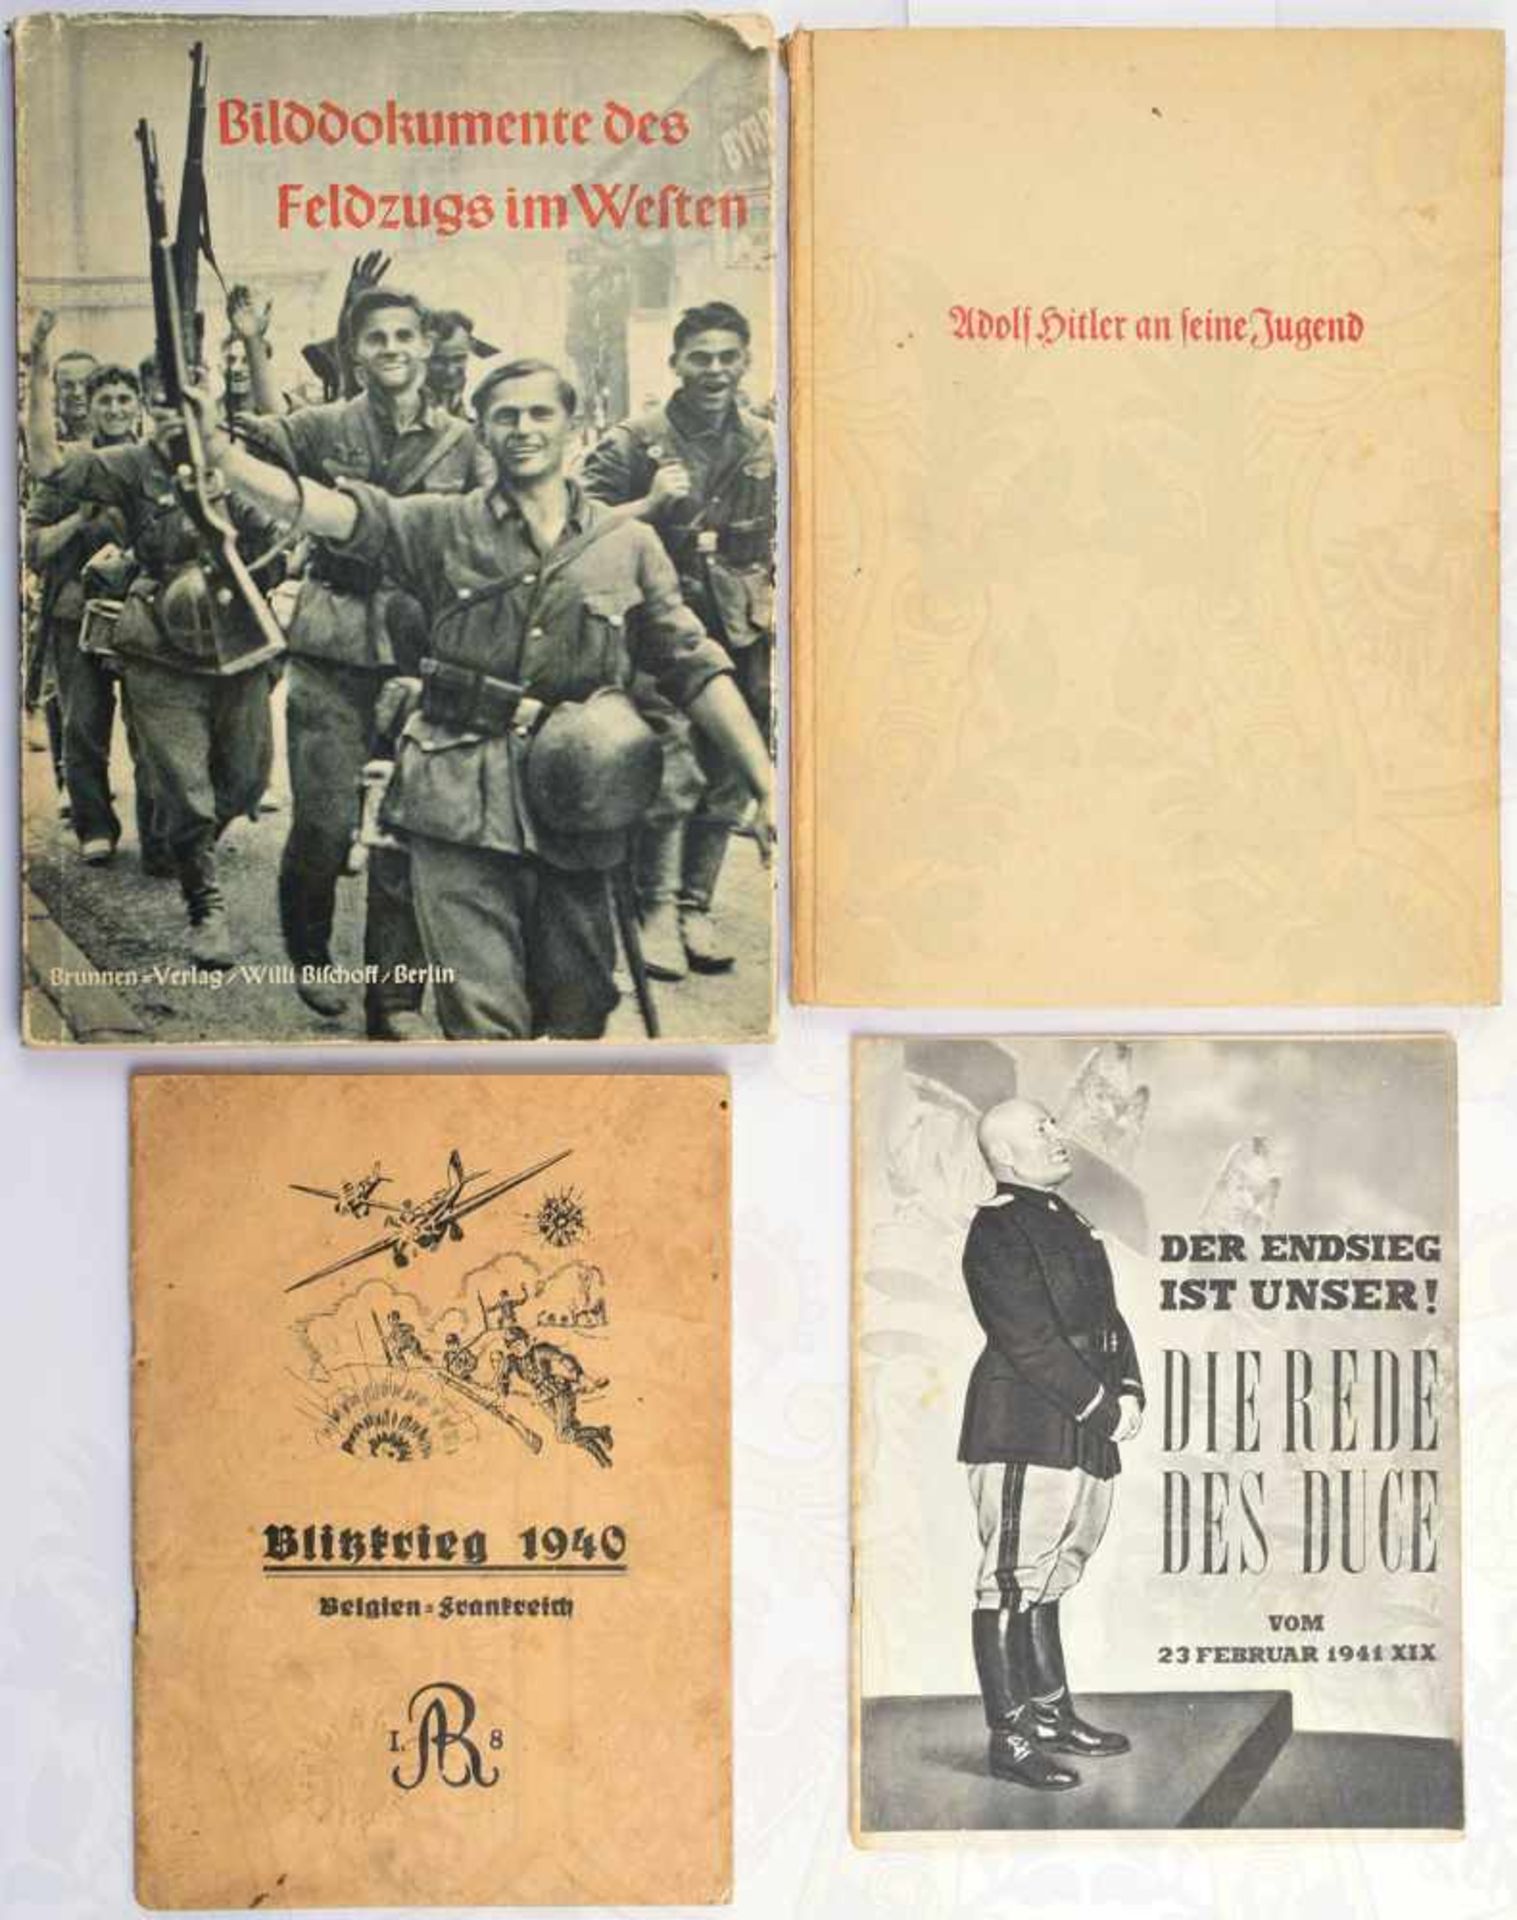 4 TITEL: Bilddokumente des Feldzugs im Westen, 1940; Blitzkrieg Belgien-Frankreich, Art.-Rgt. 8,